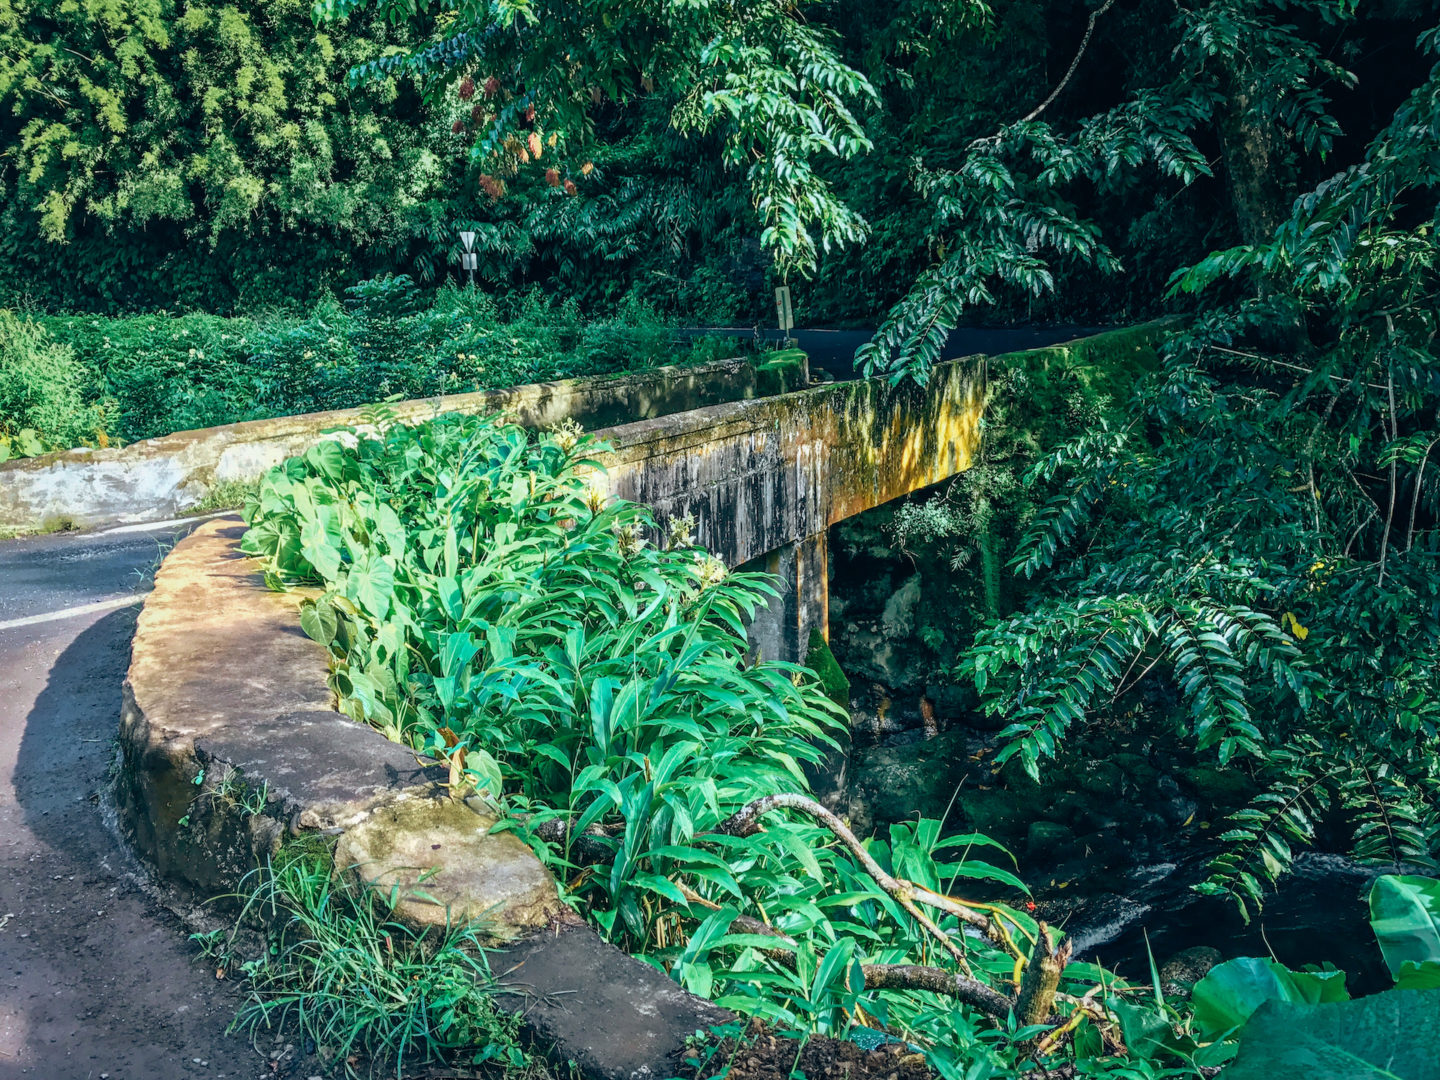 Narrow one-lane bridge - Road to Hana, Maui Hawai'i